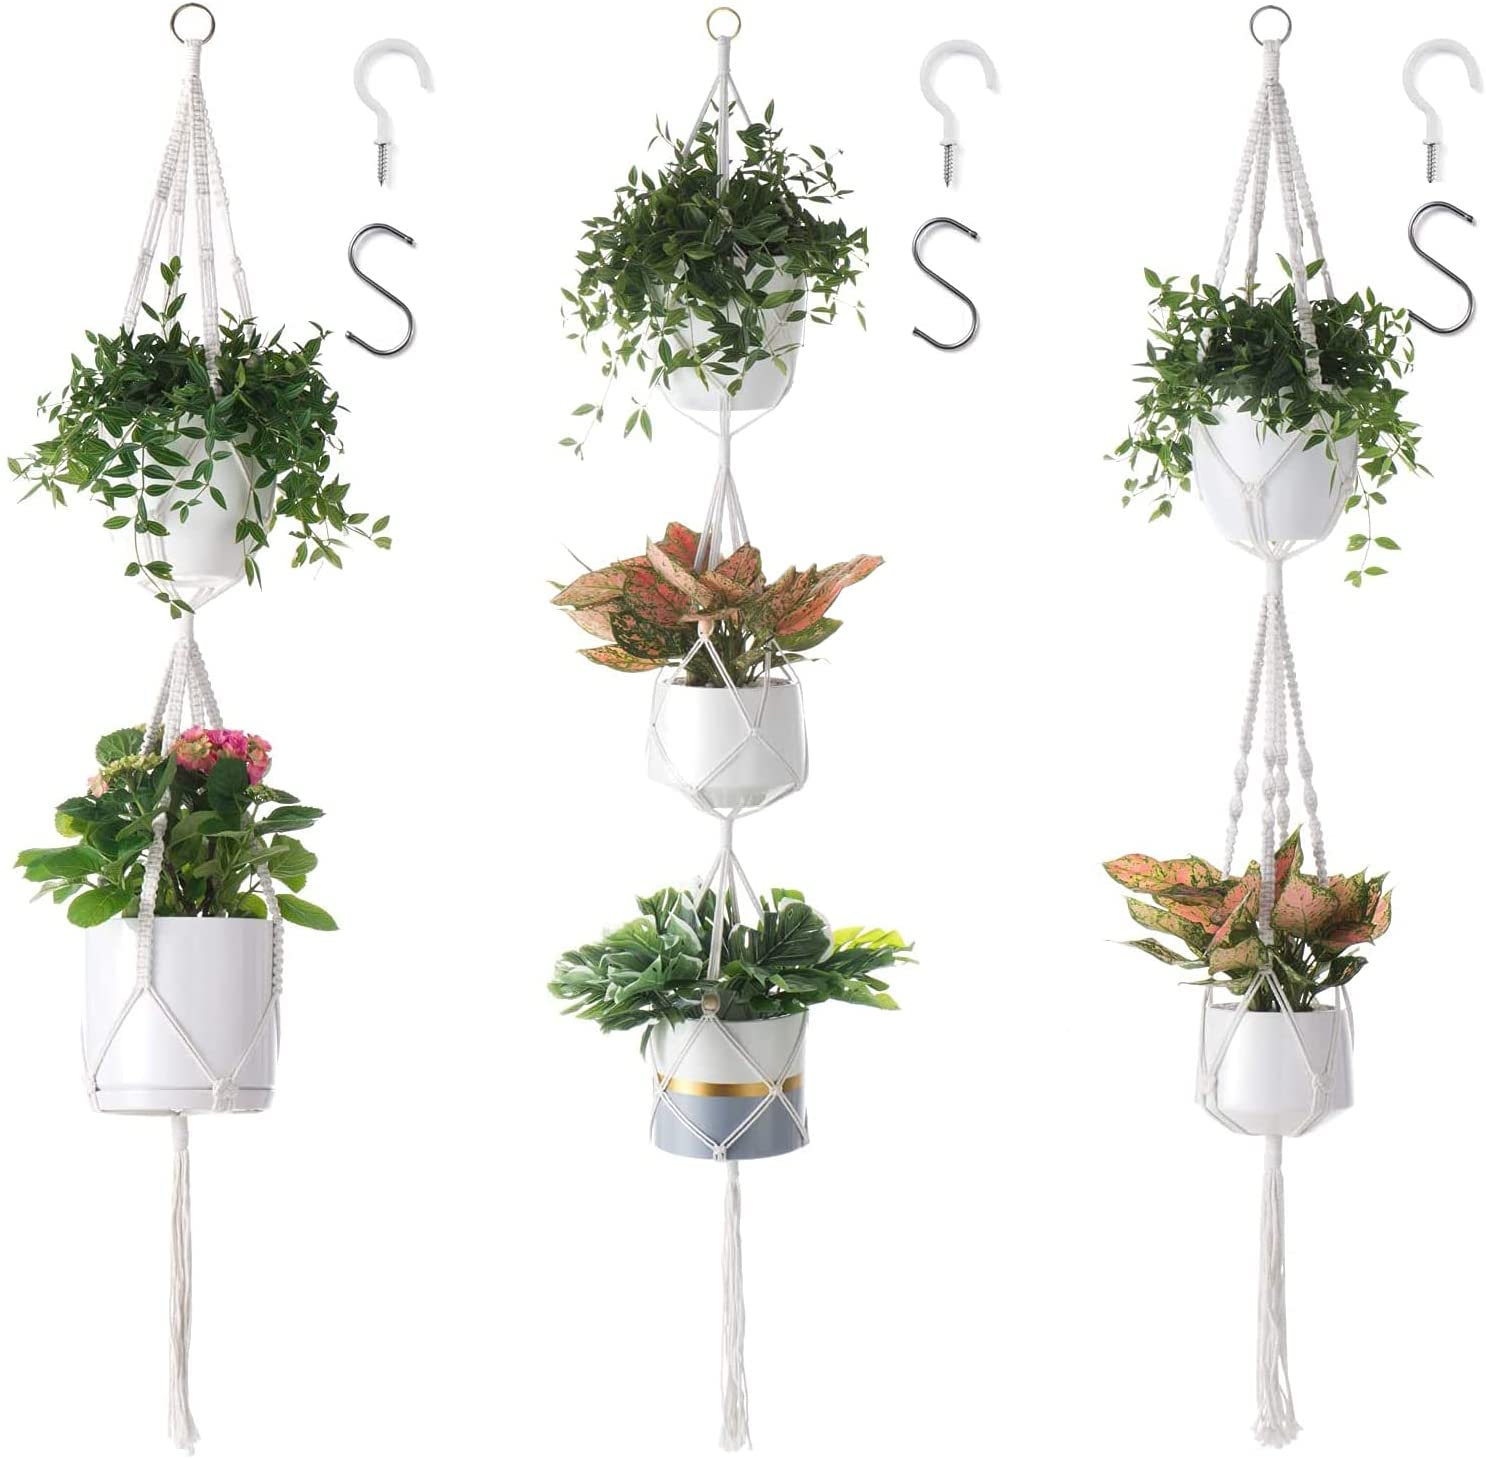 Set of Indoor Hanging Planter Basket with Hooks Handmade Cotton Rope Flower Pot Holder for Indoor Outdoor Home Decor with 6 Hooks